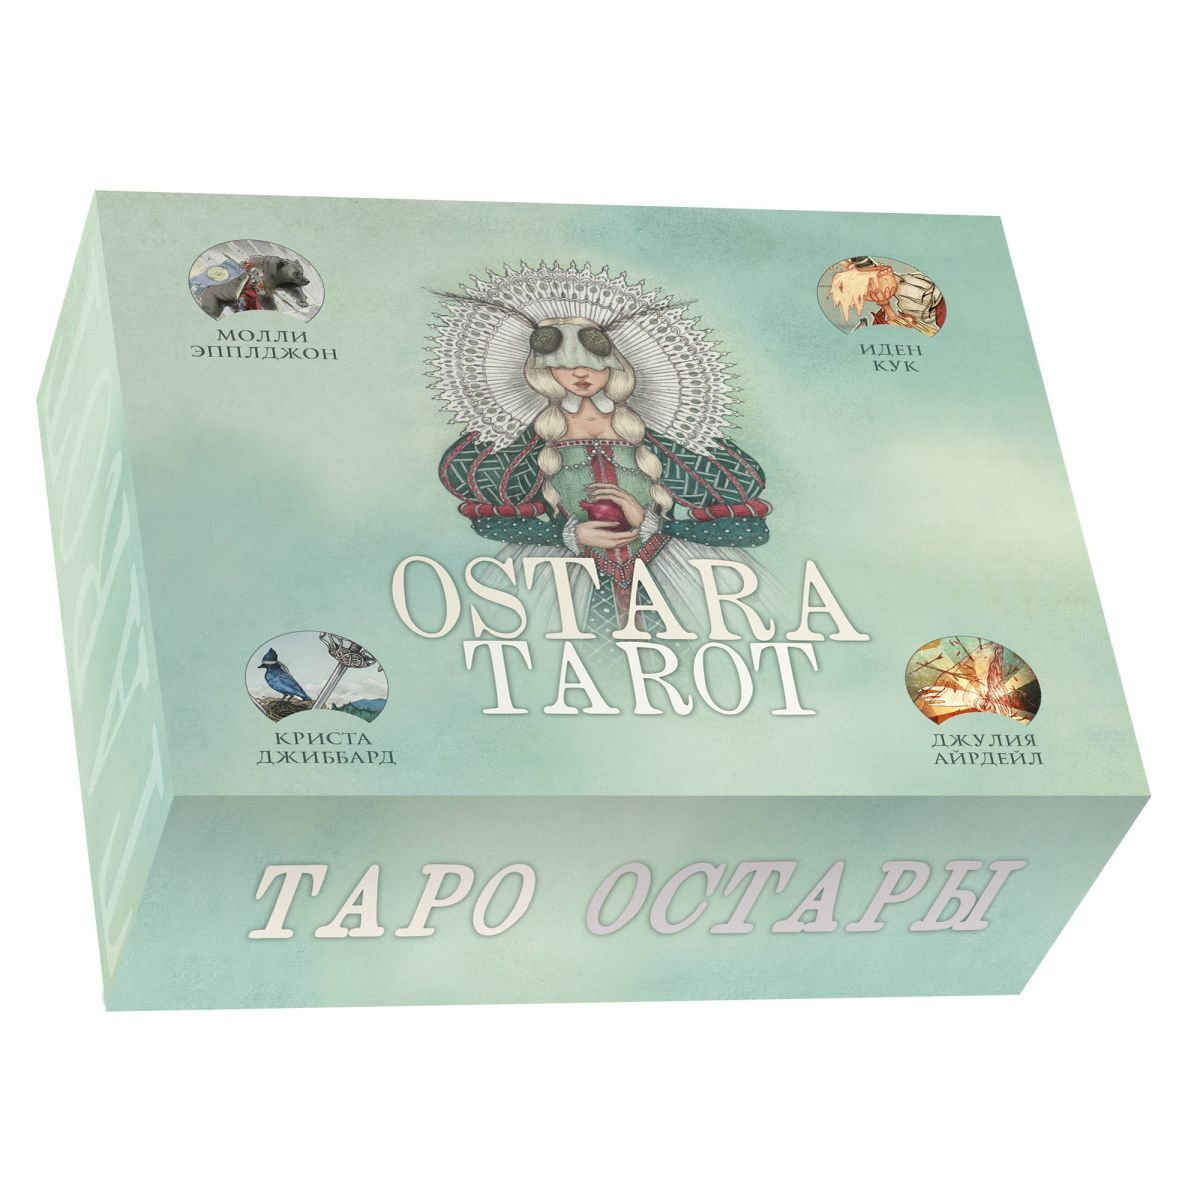 

Подарочный набор "Остара Таро" (Ostara Tarot)